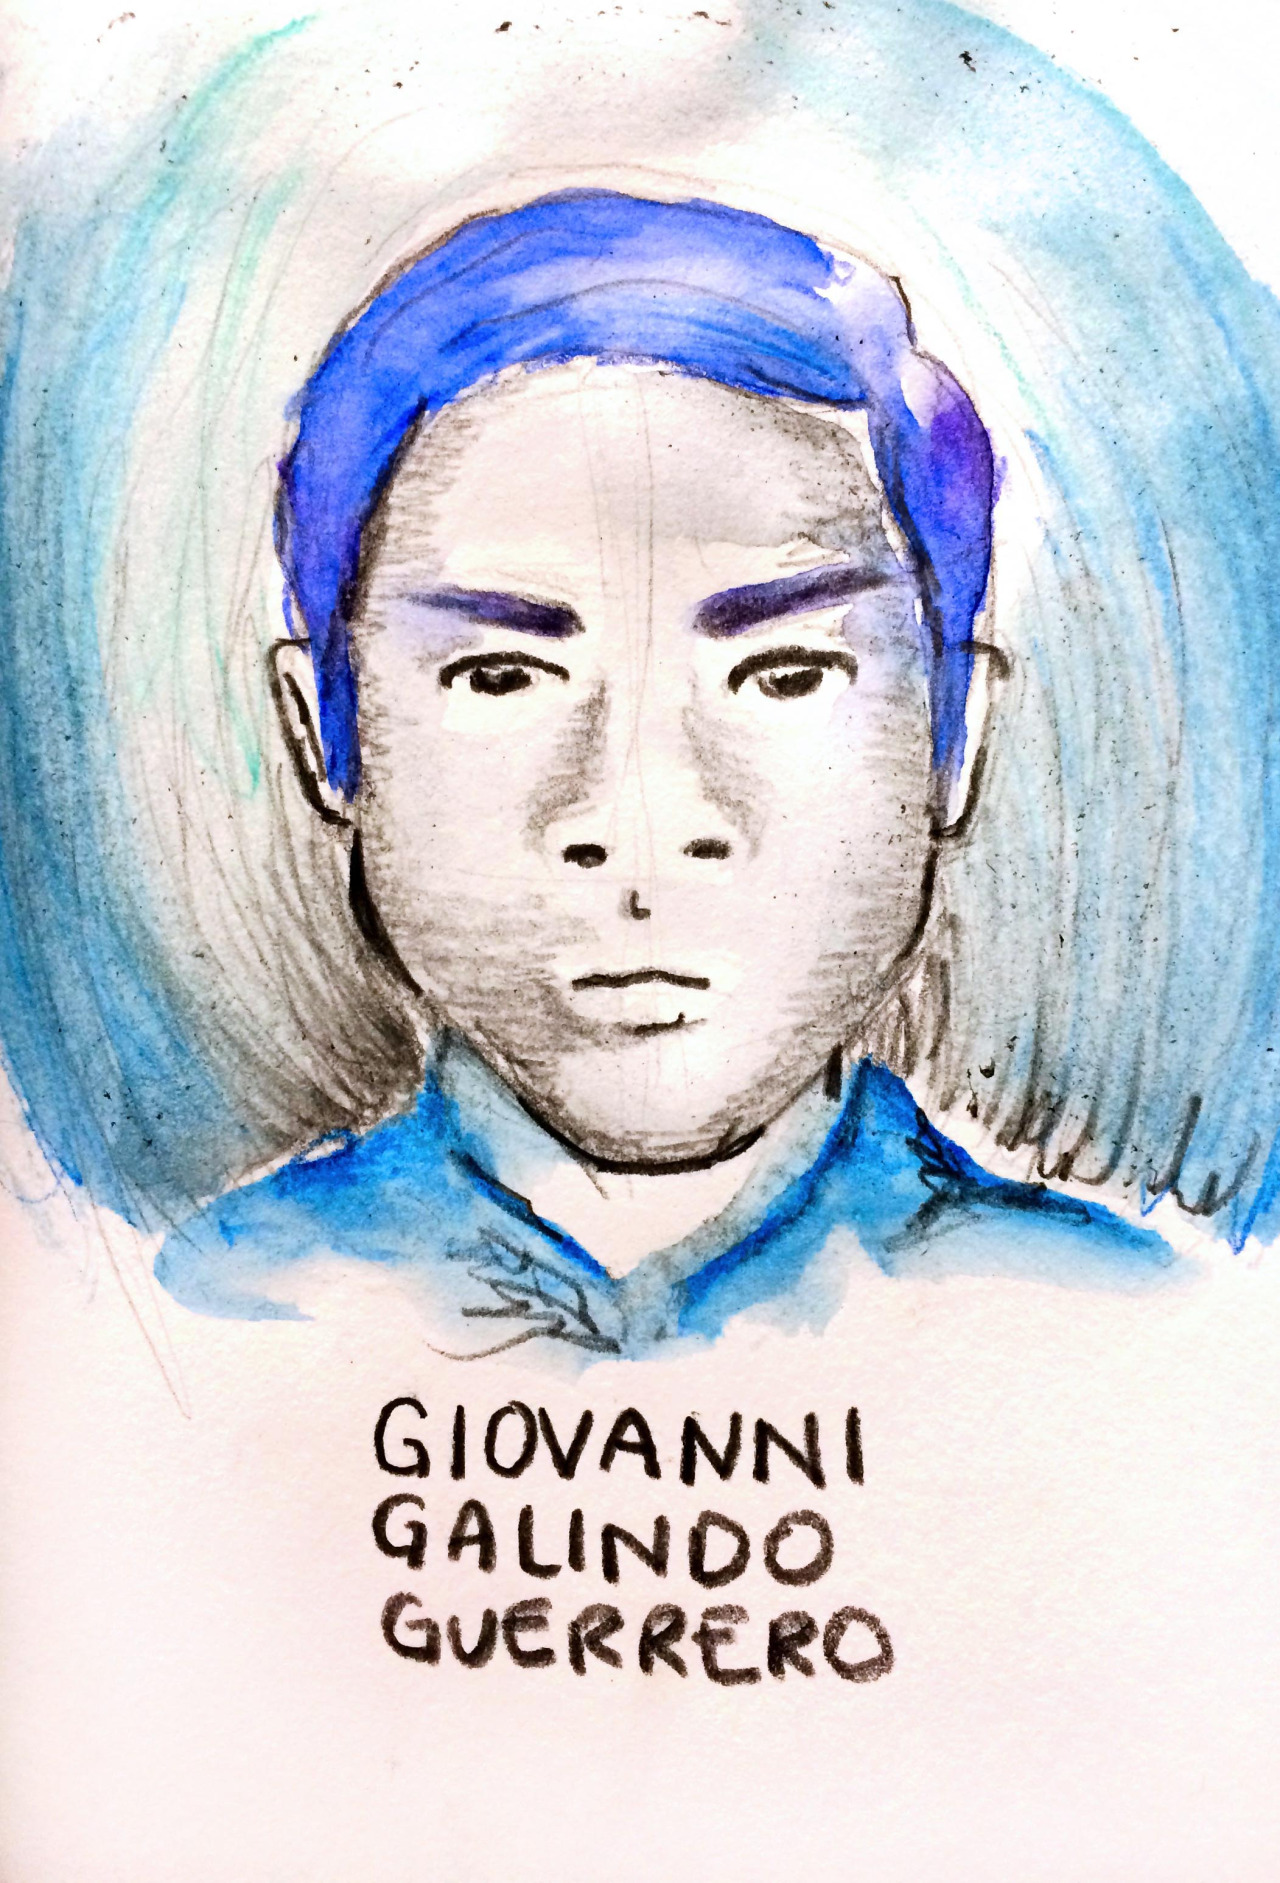 26 Giovanni Galindo Guerrero 2